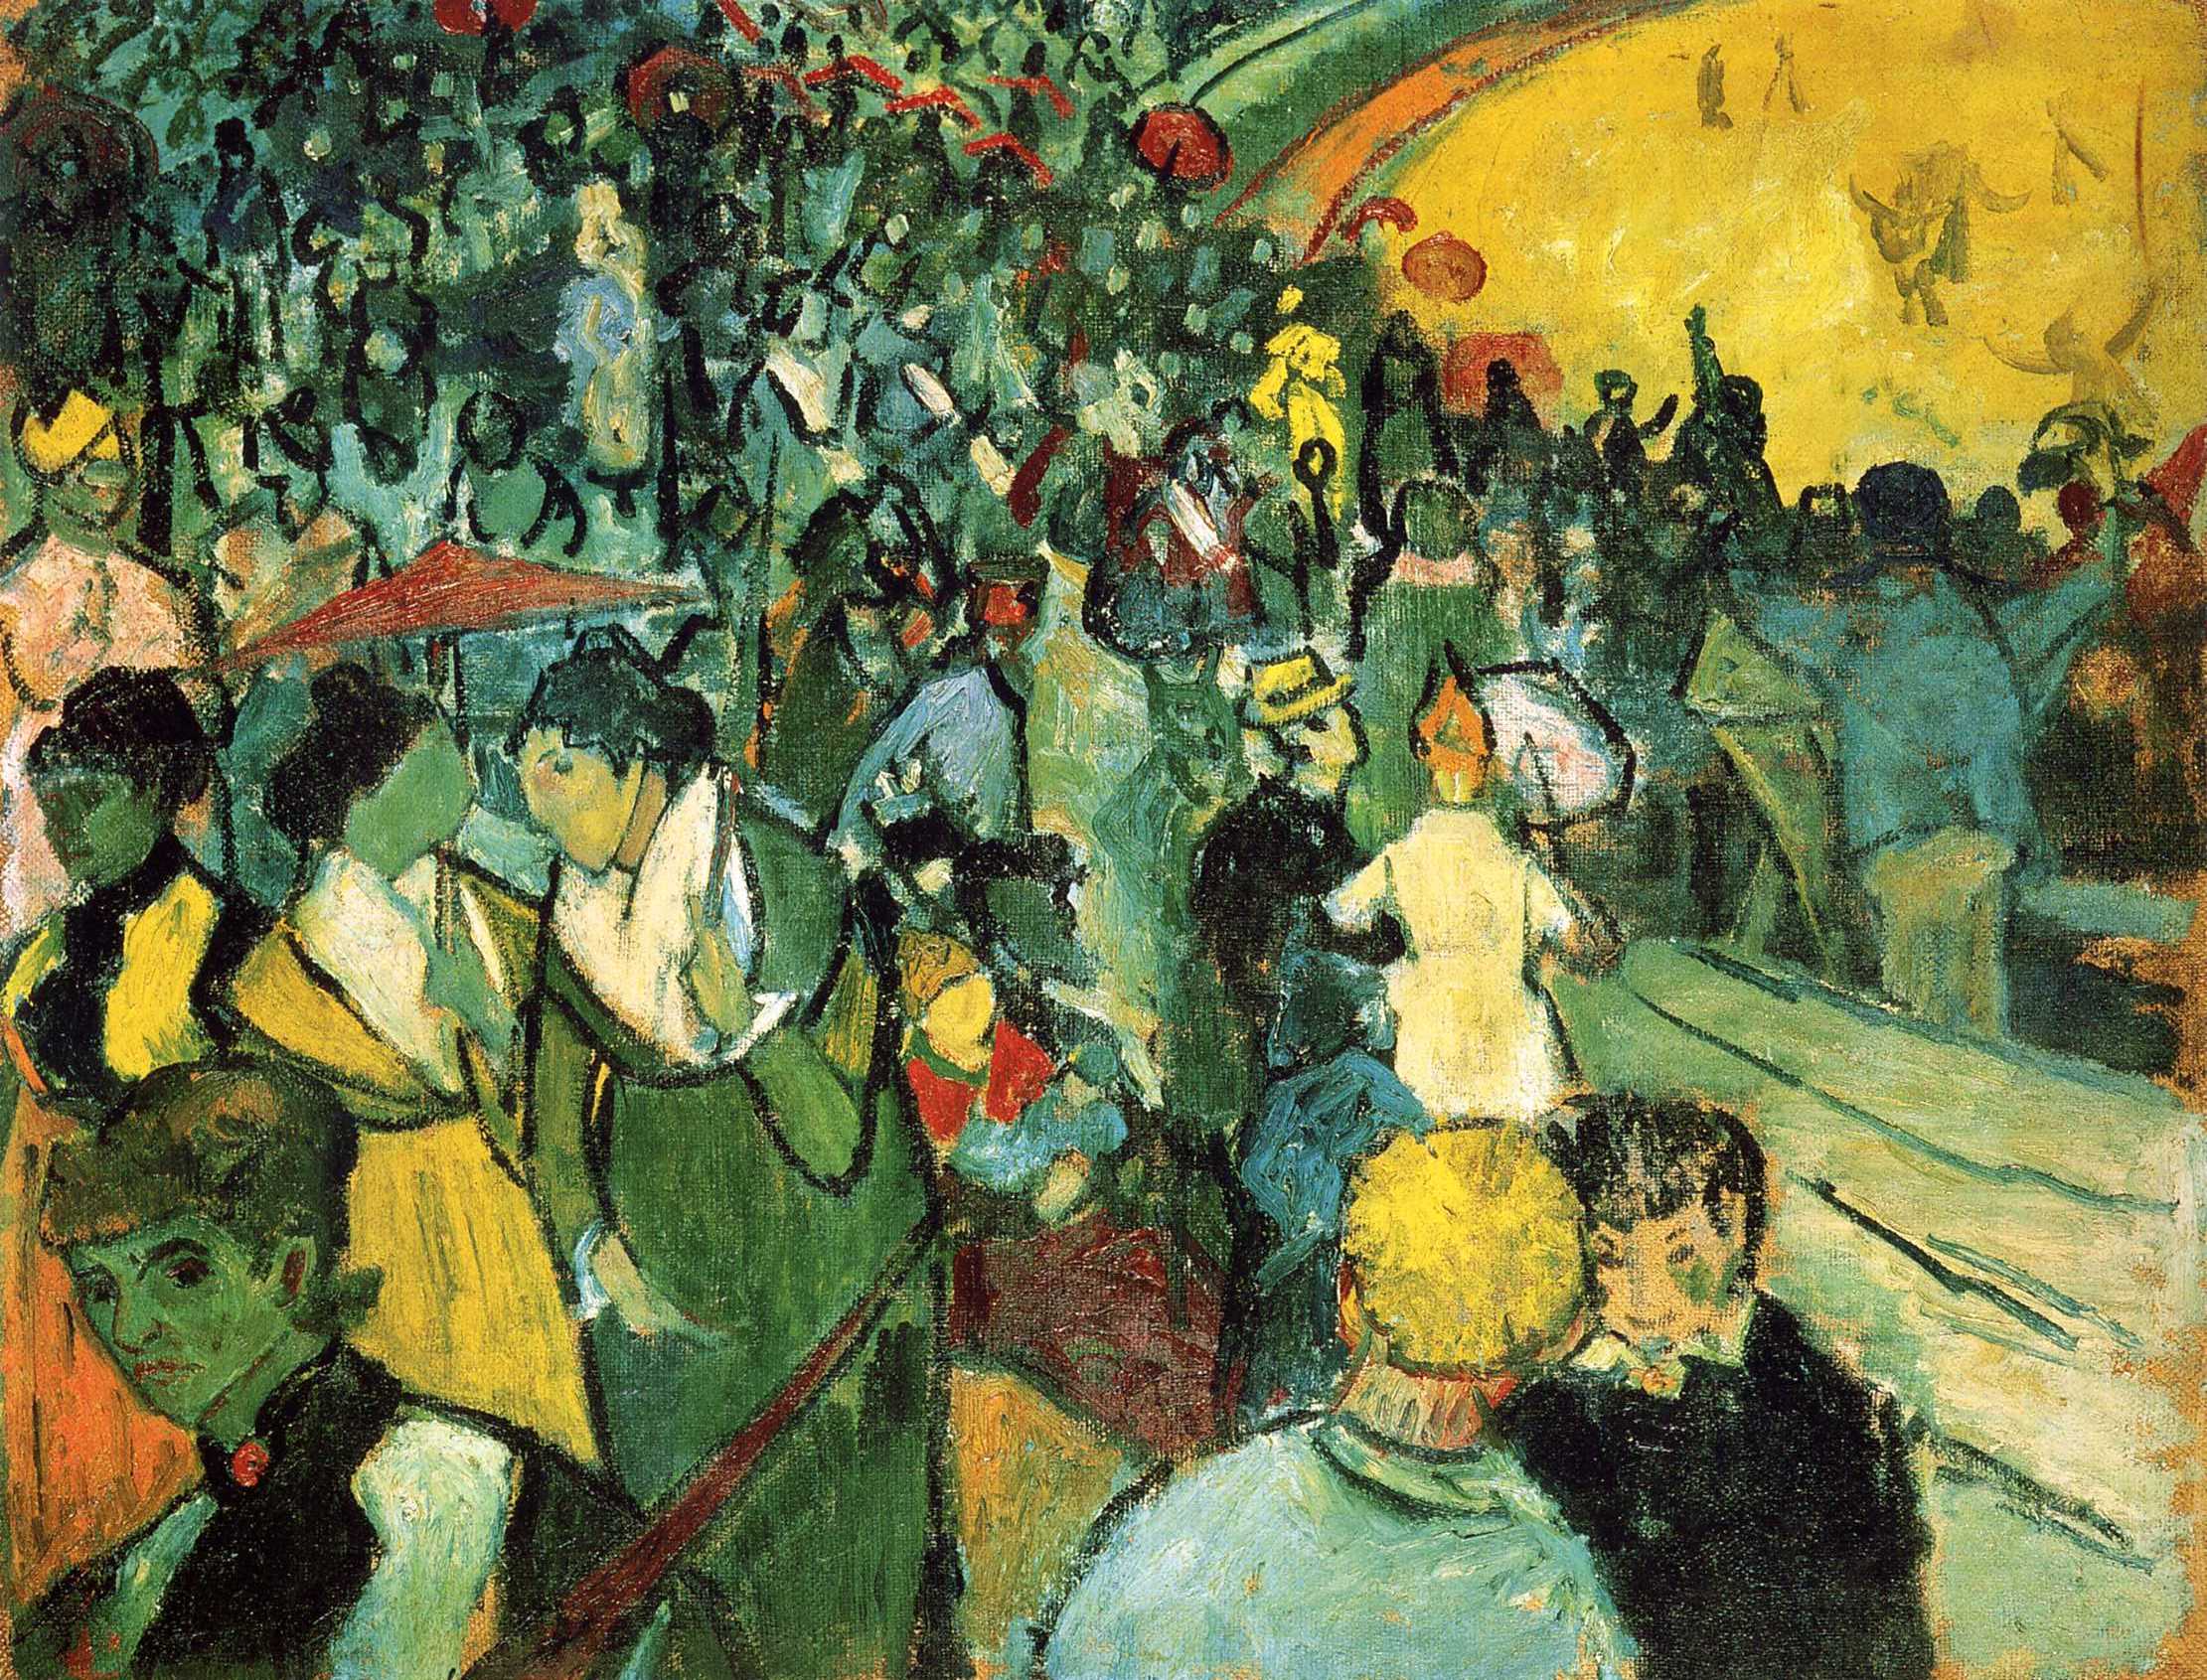 角鬥場 by Vincent van Gogh - 1888 - 73 x 92 cm 